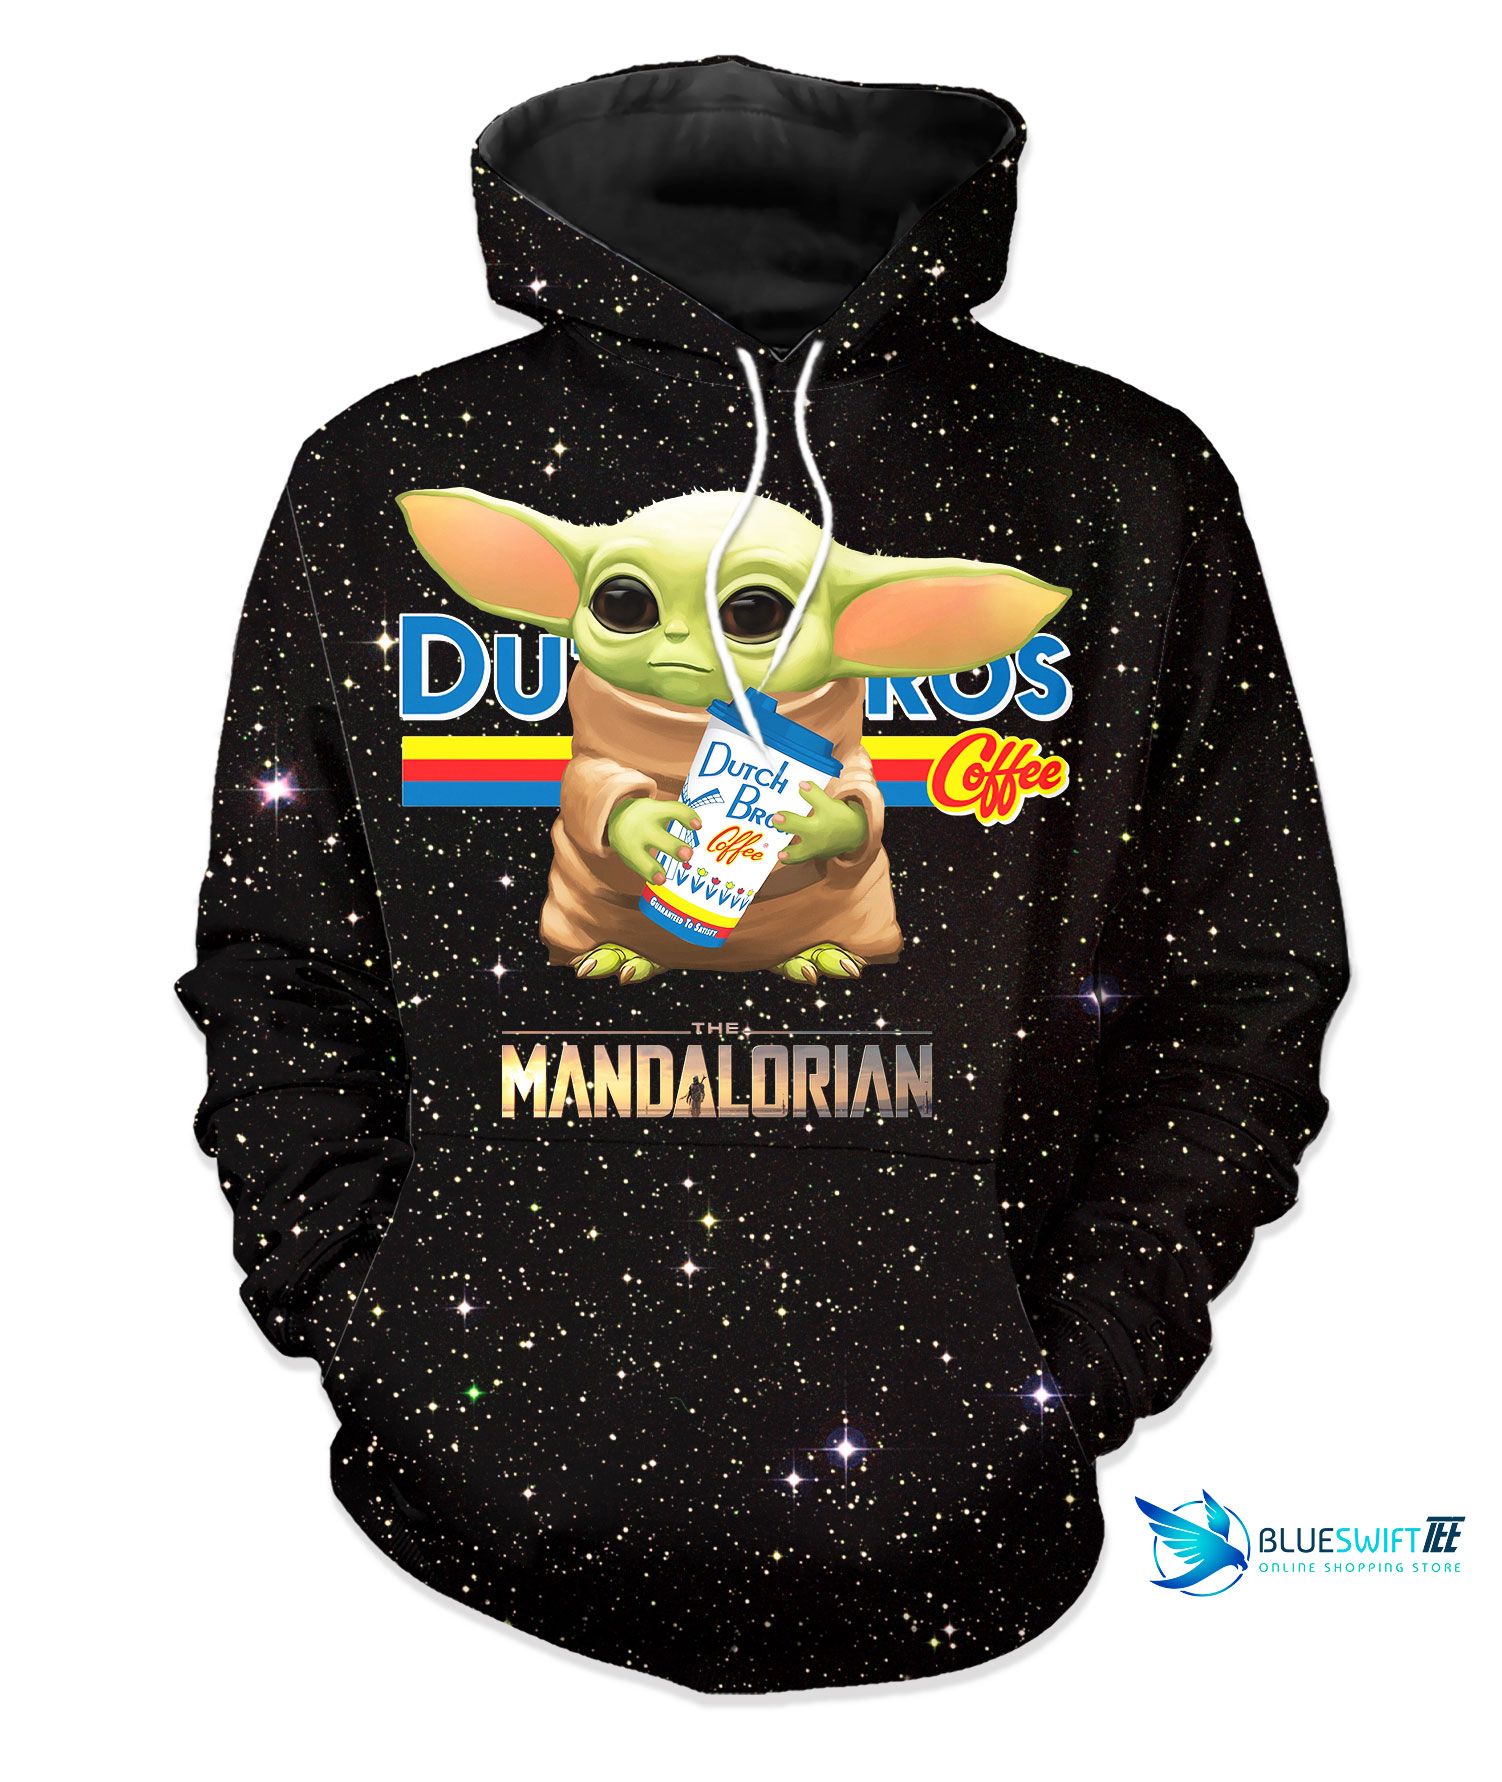 Baby Yoda hug Dutch-Bros Coffee The Mandalorian 3D All Over Printed Hoodie